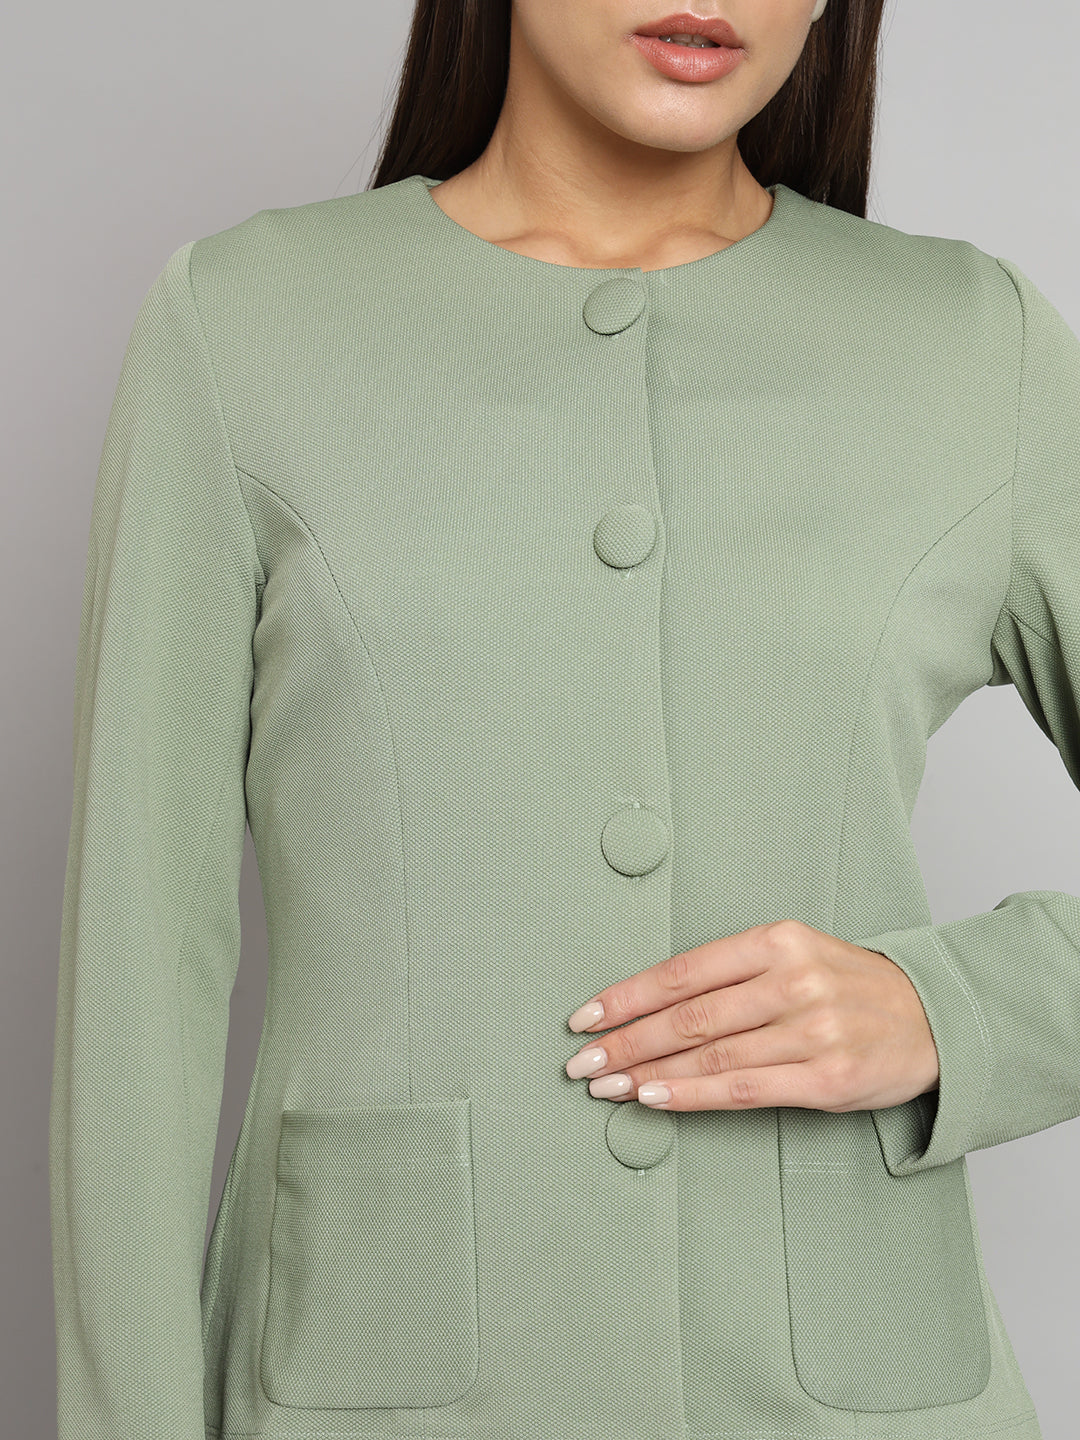 Formal Stretch Dress Suit - Sage Green